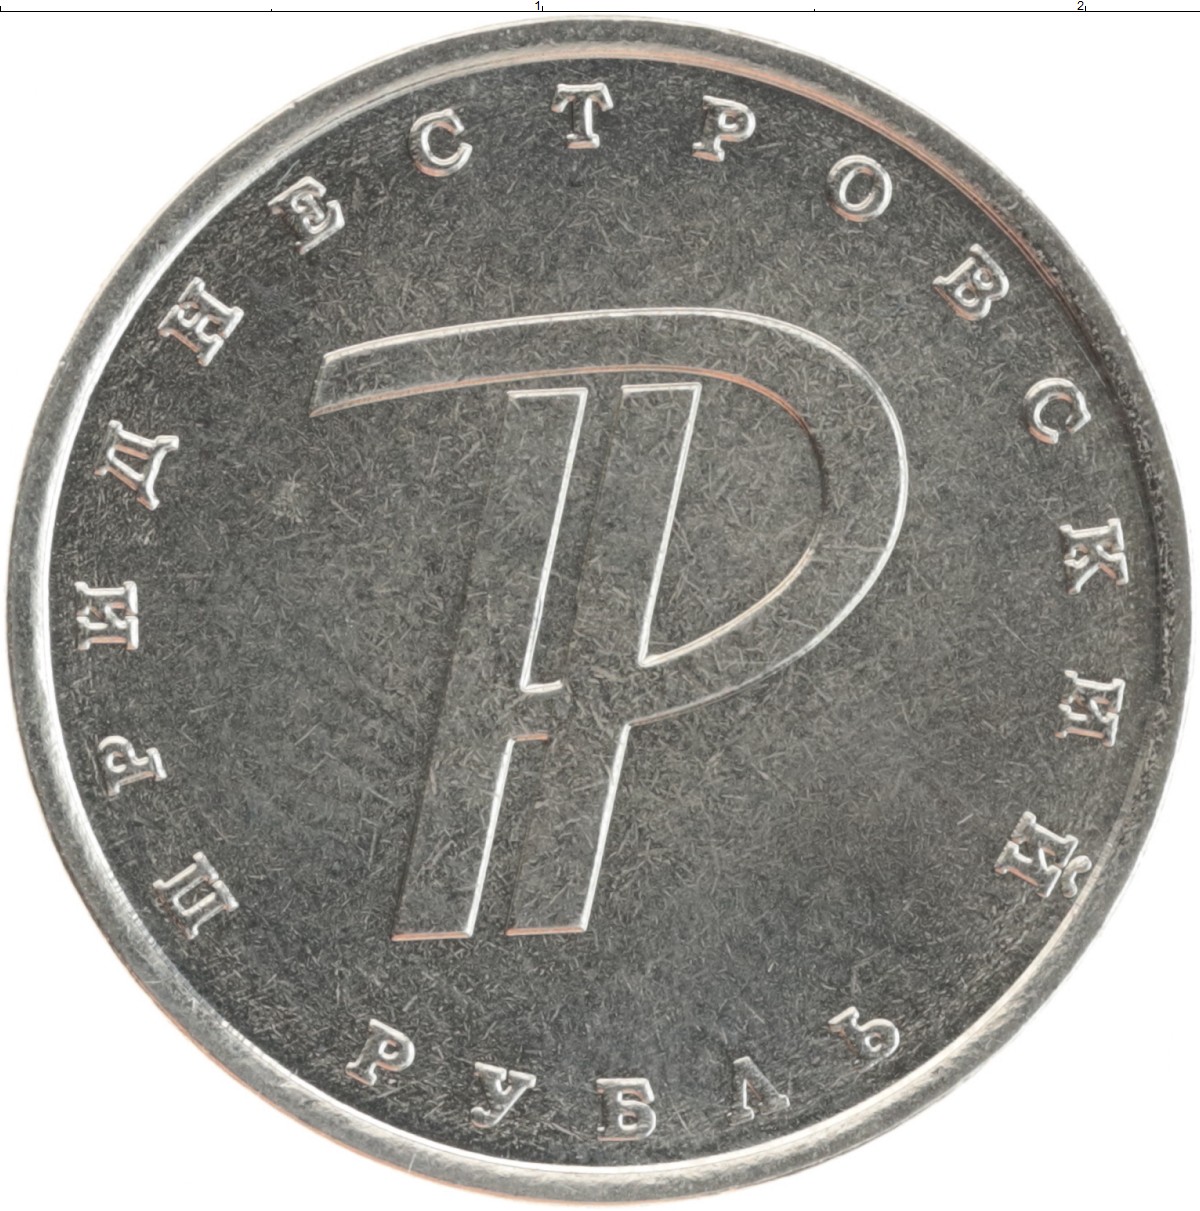 Монета знак рубля. Монета 1 рубль Медно-никель. Монета 1 рубль 2015. Приднестровье 1 рубль 2015. Монета 1 руб 2015.